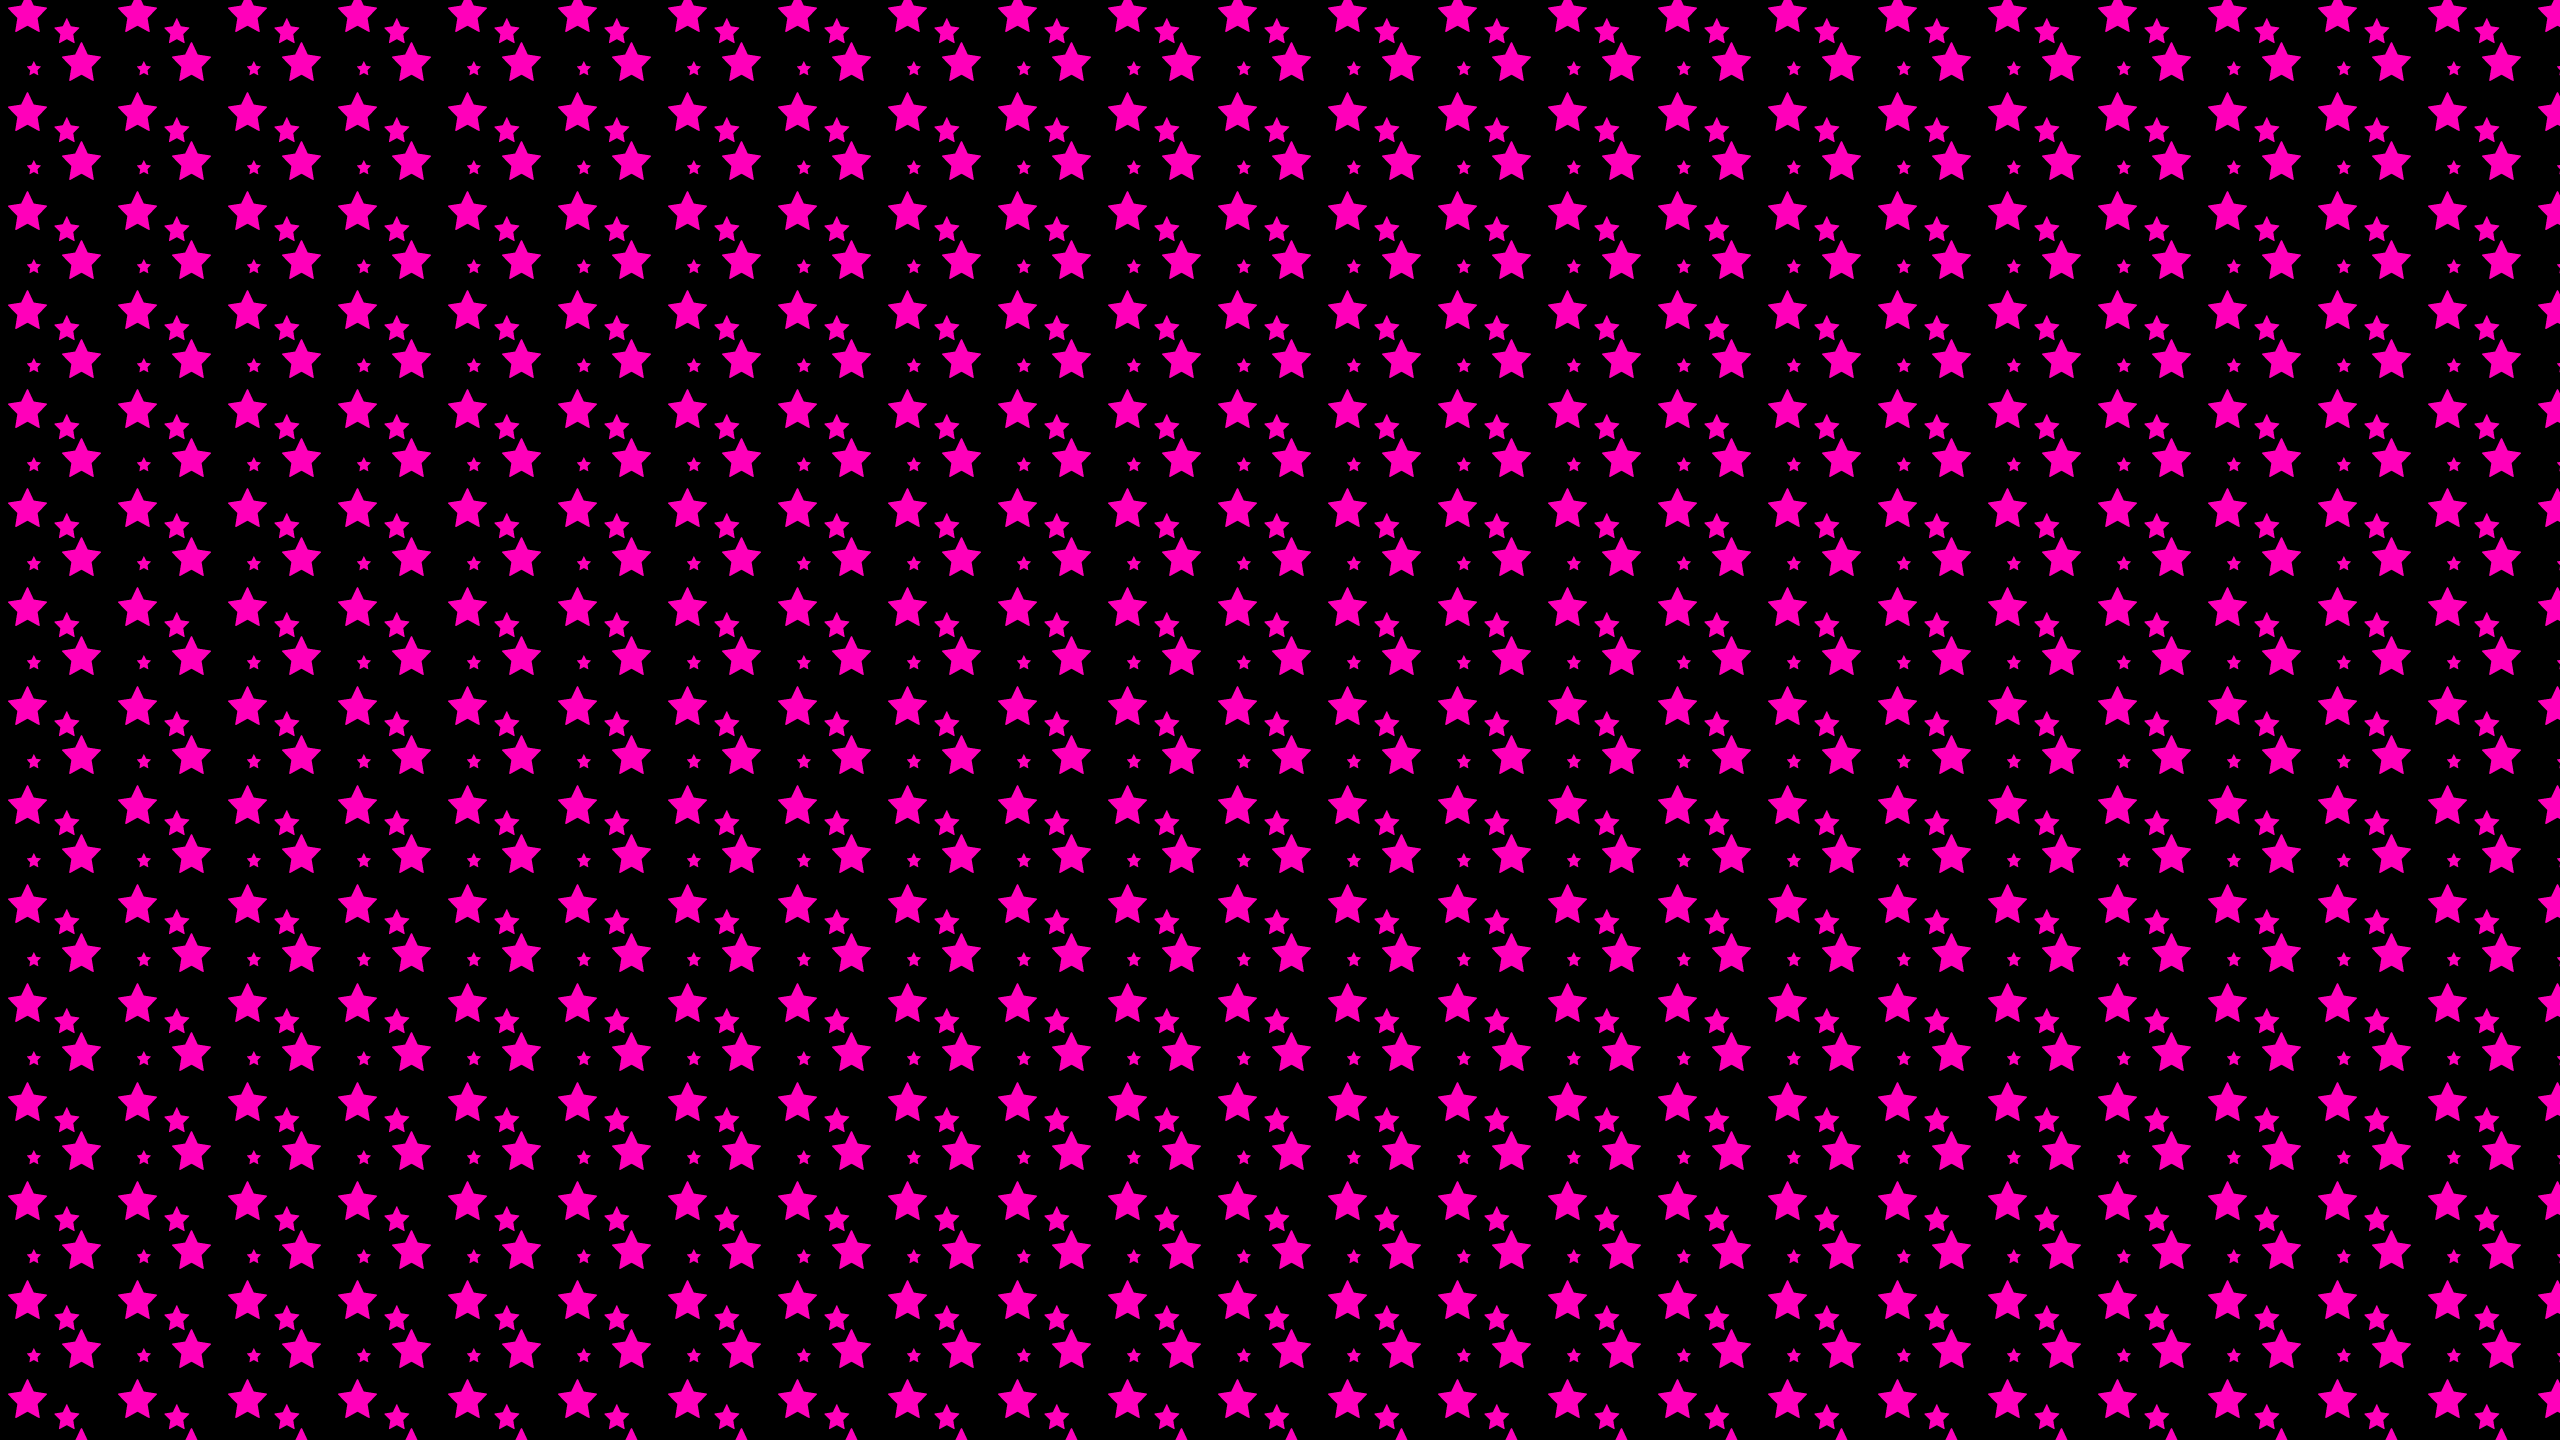 Falling Pink Stars Desktop Wallpaper